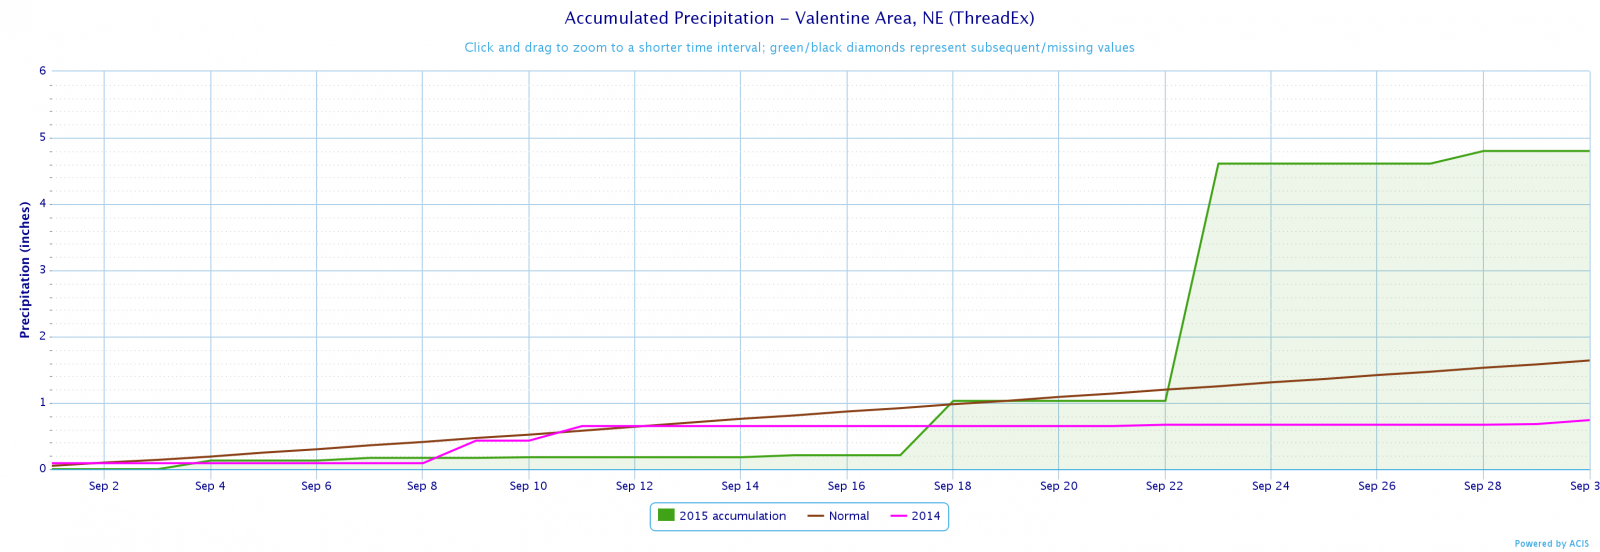 August Precipitation Summary for Valentine (Click to zoom)